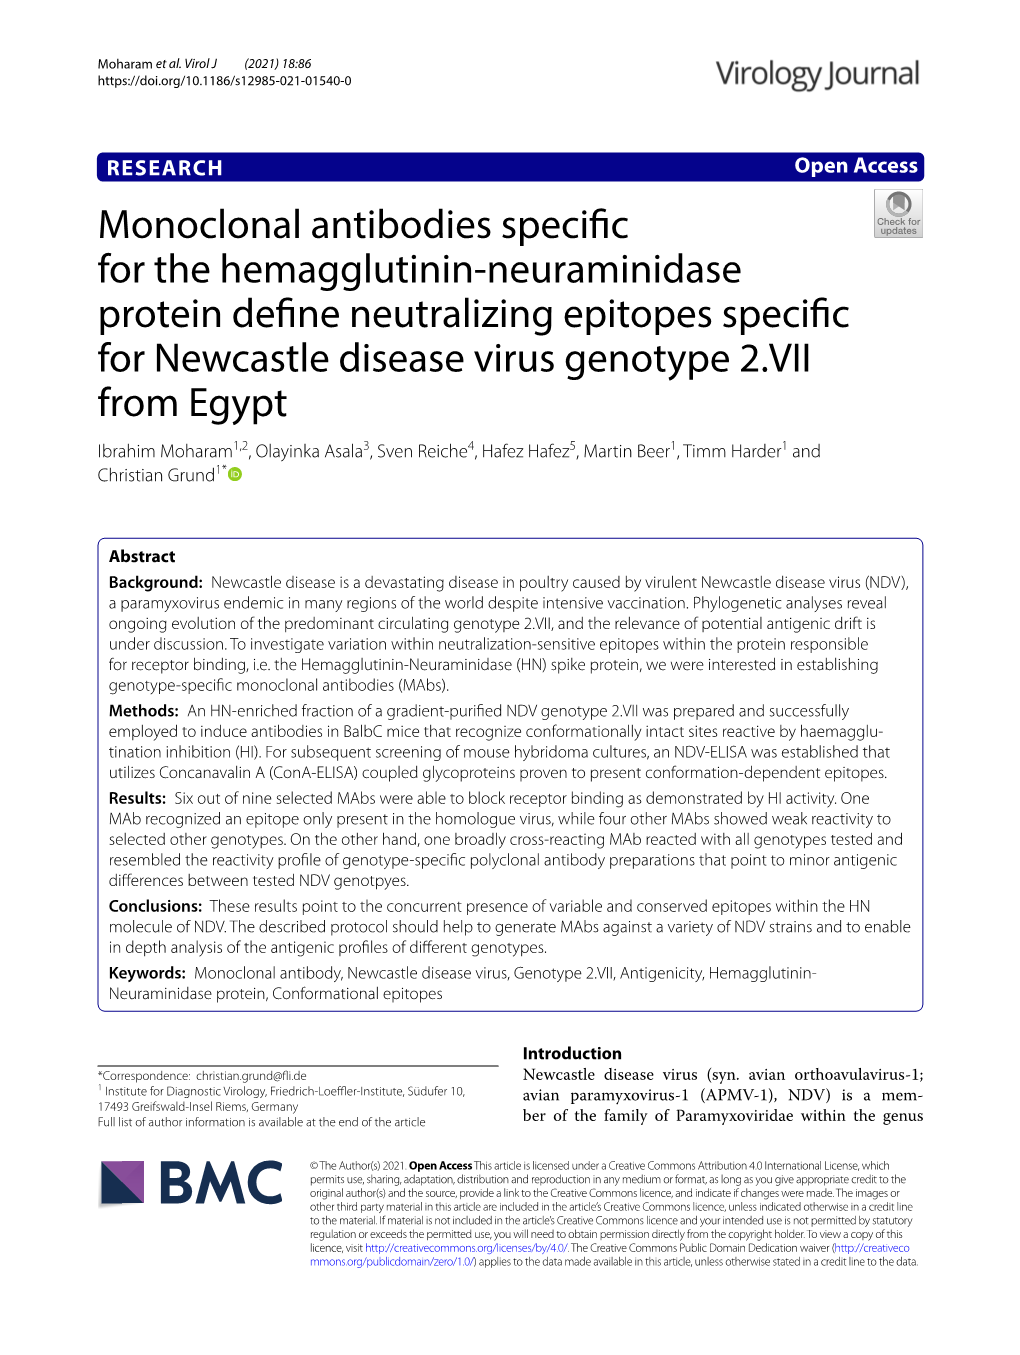 Monoclonal Antibodies Specific for the Hemagglutinin-Neuraminidase